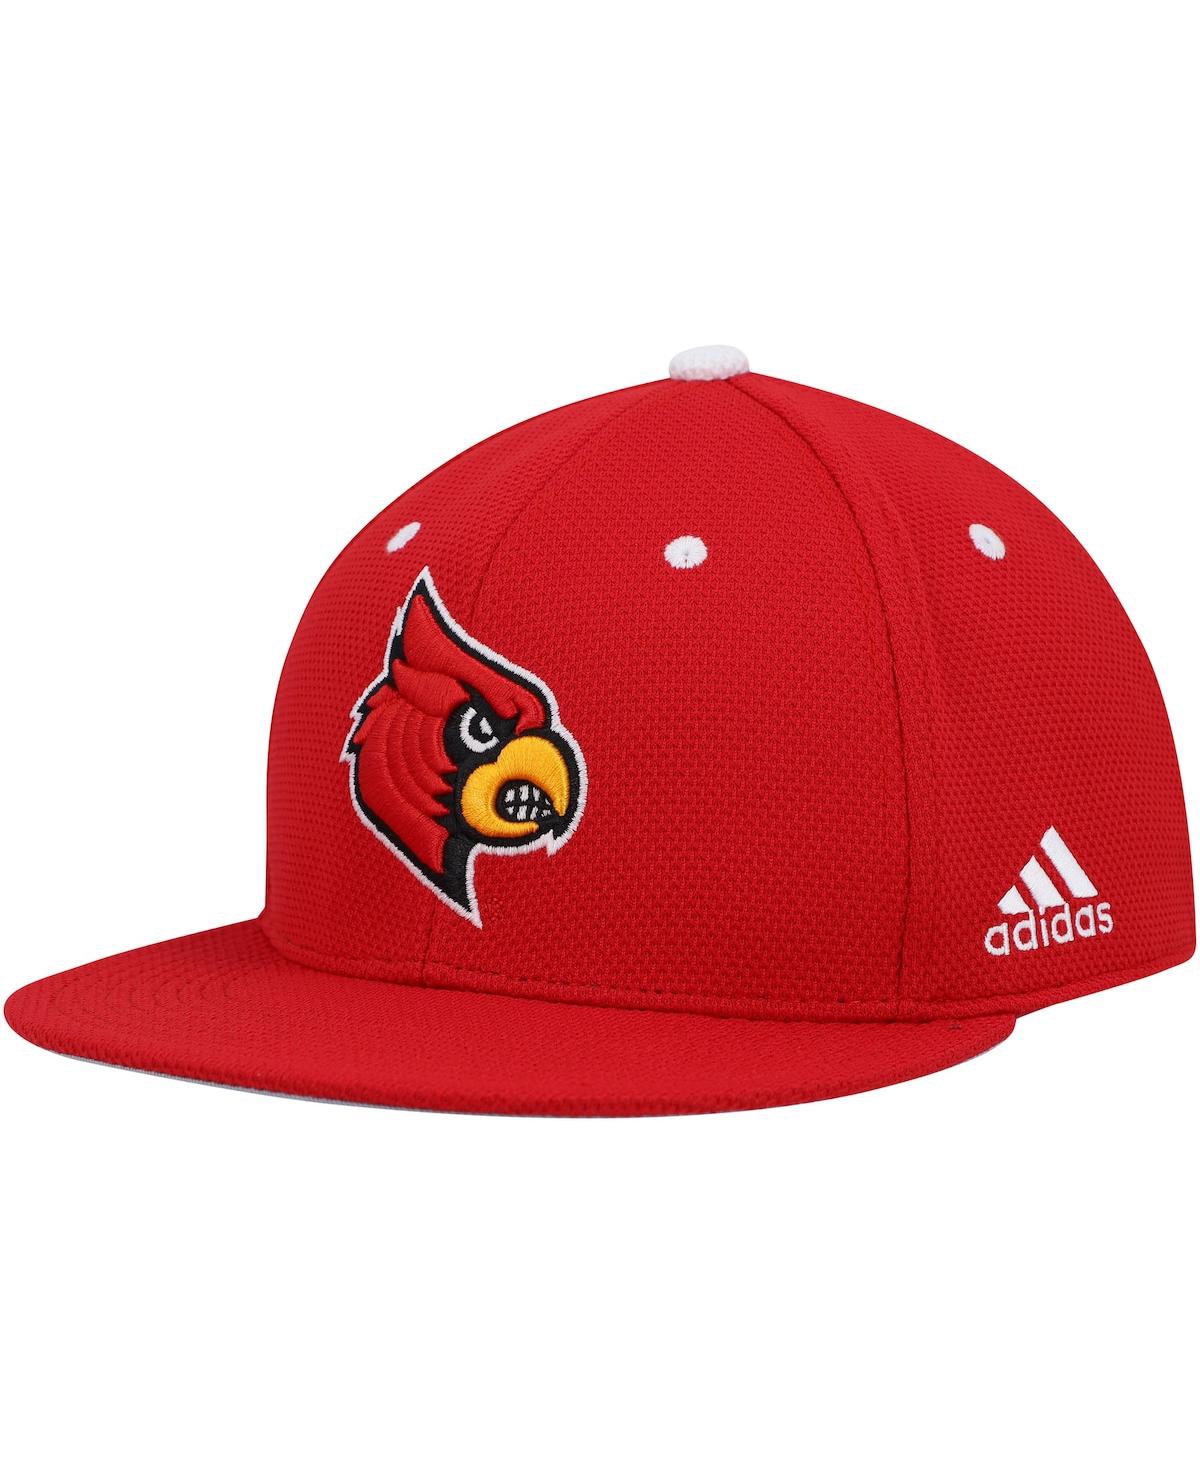 Shop Adidas Originals Men's Adidas Red Louisville Cardinals On-field Baseball Fitted Hat